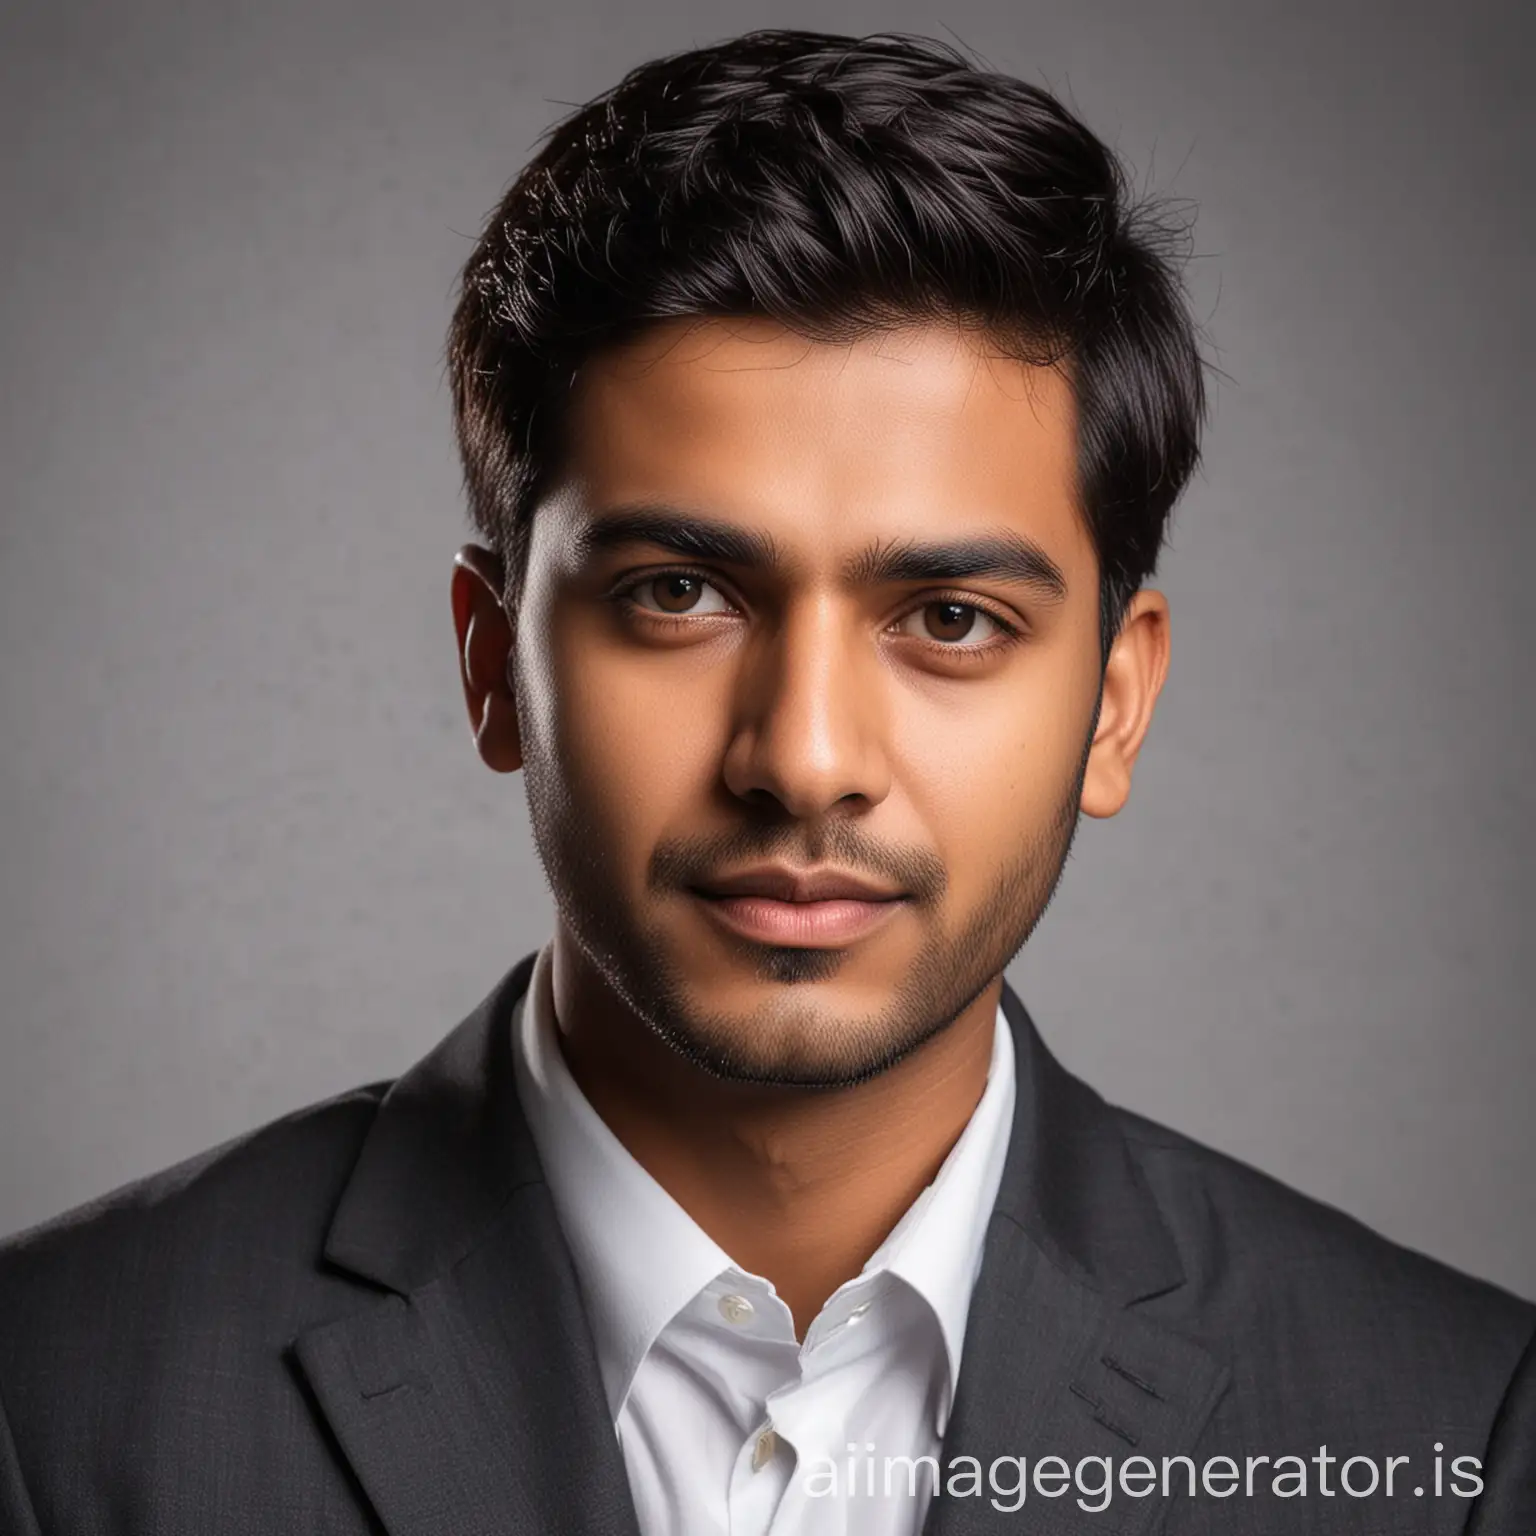 Professional-24YearOld-Indian-Male-Headshot-Portrait